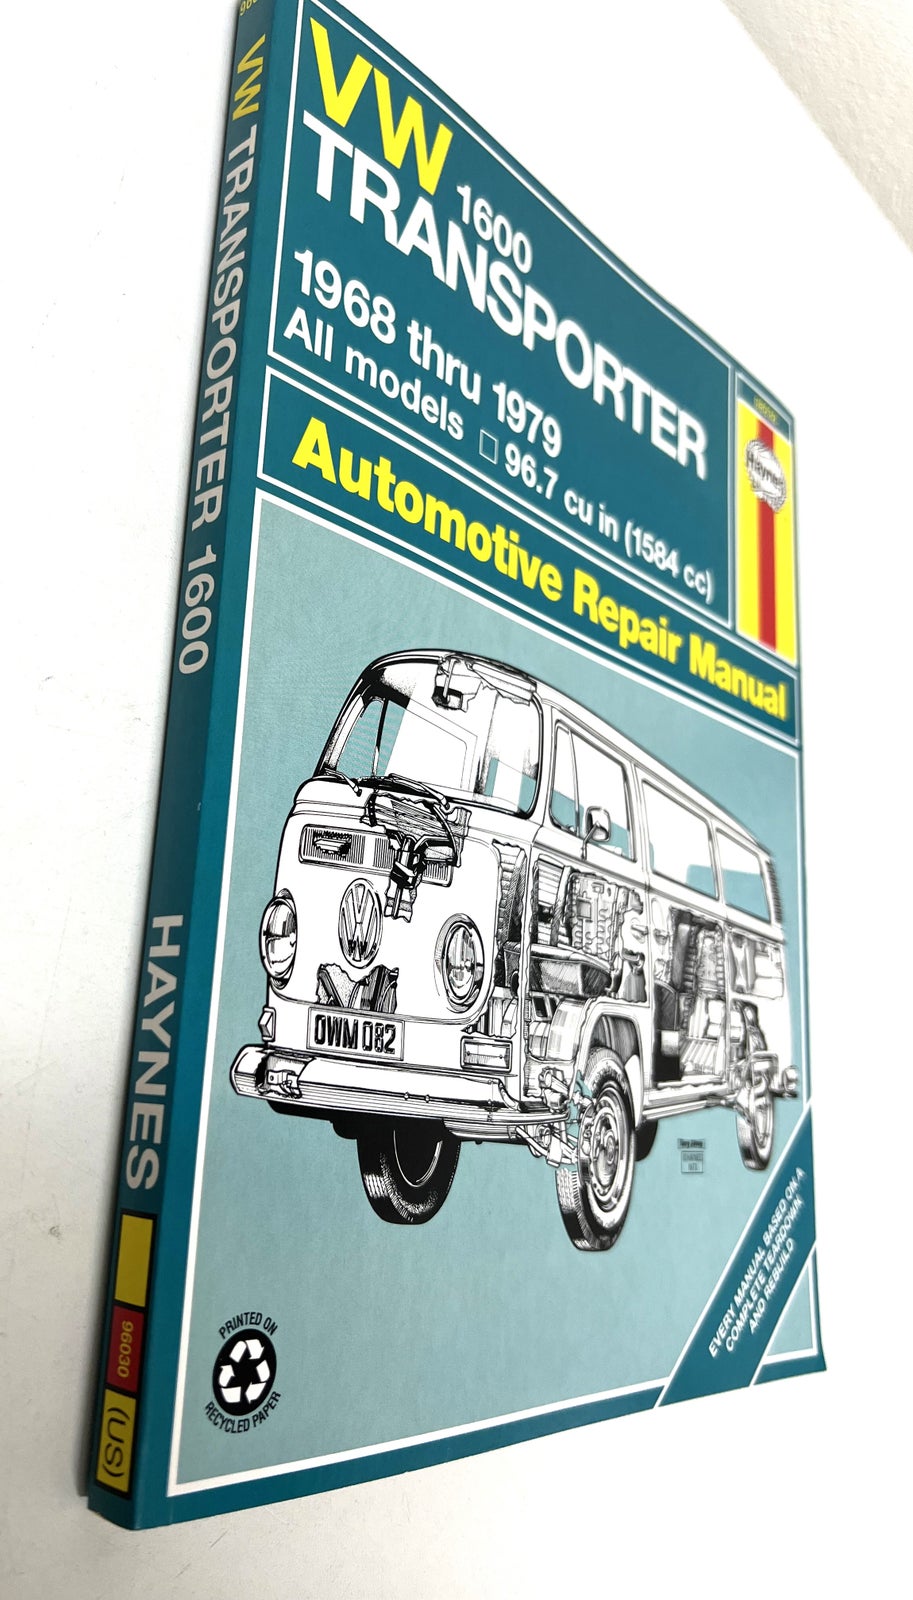 VW TRANSPORTER 1600 - 1968 to 1979, Haynes Automotive Repair